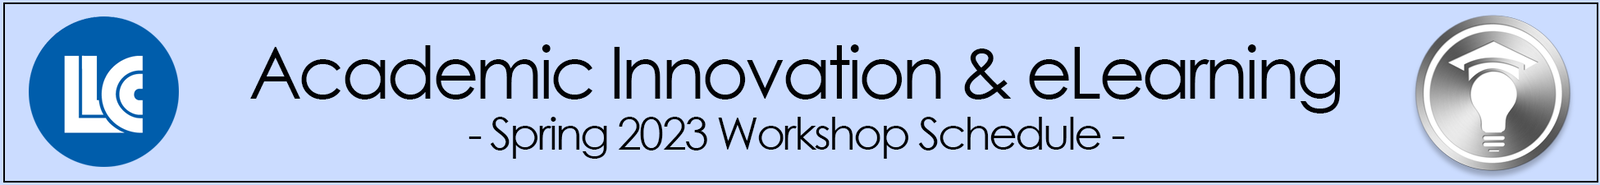 LLCC Academic Innovation & eLearning. Spring 2023 Workshop Schedule